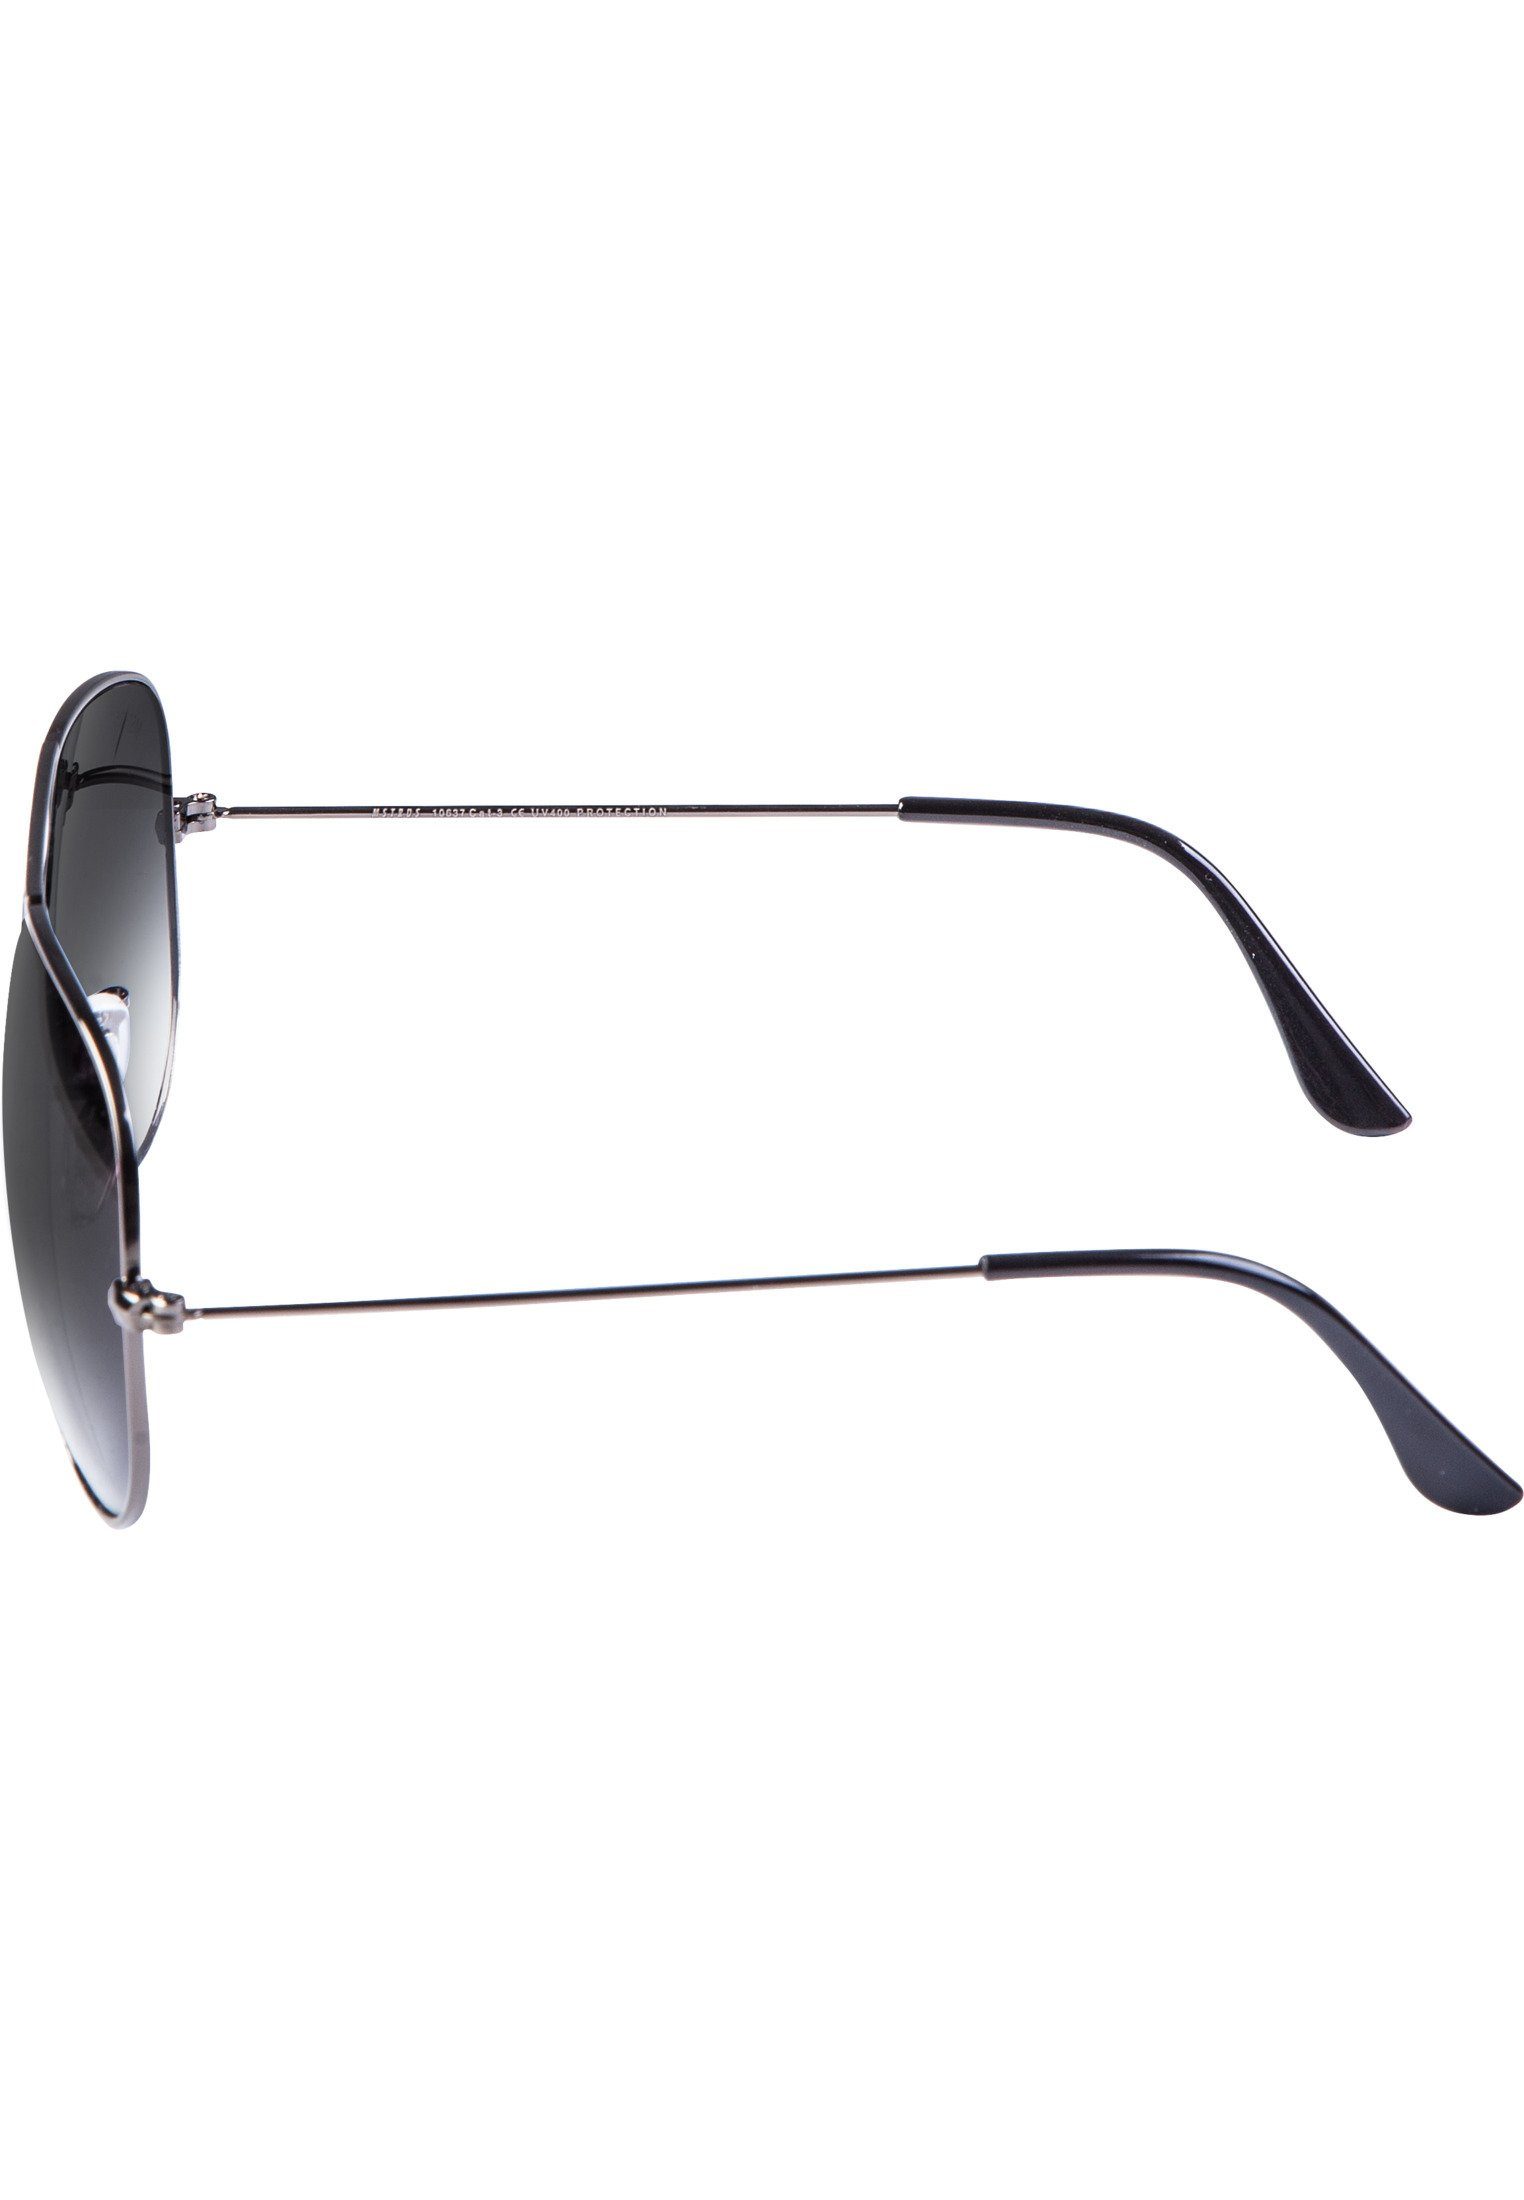 Accessoires PureAv Sonnenbrille gun/grey Sunglasses MSTRDS